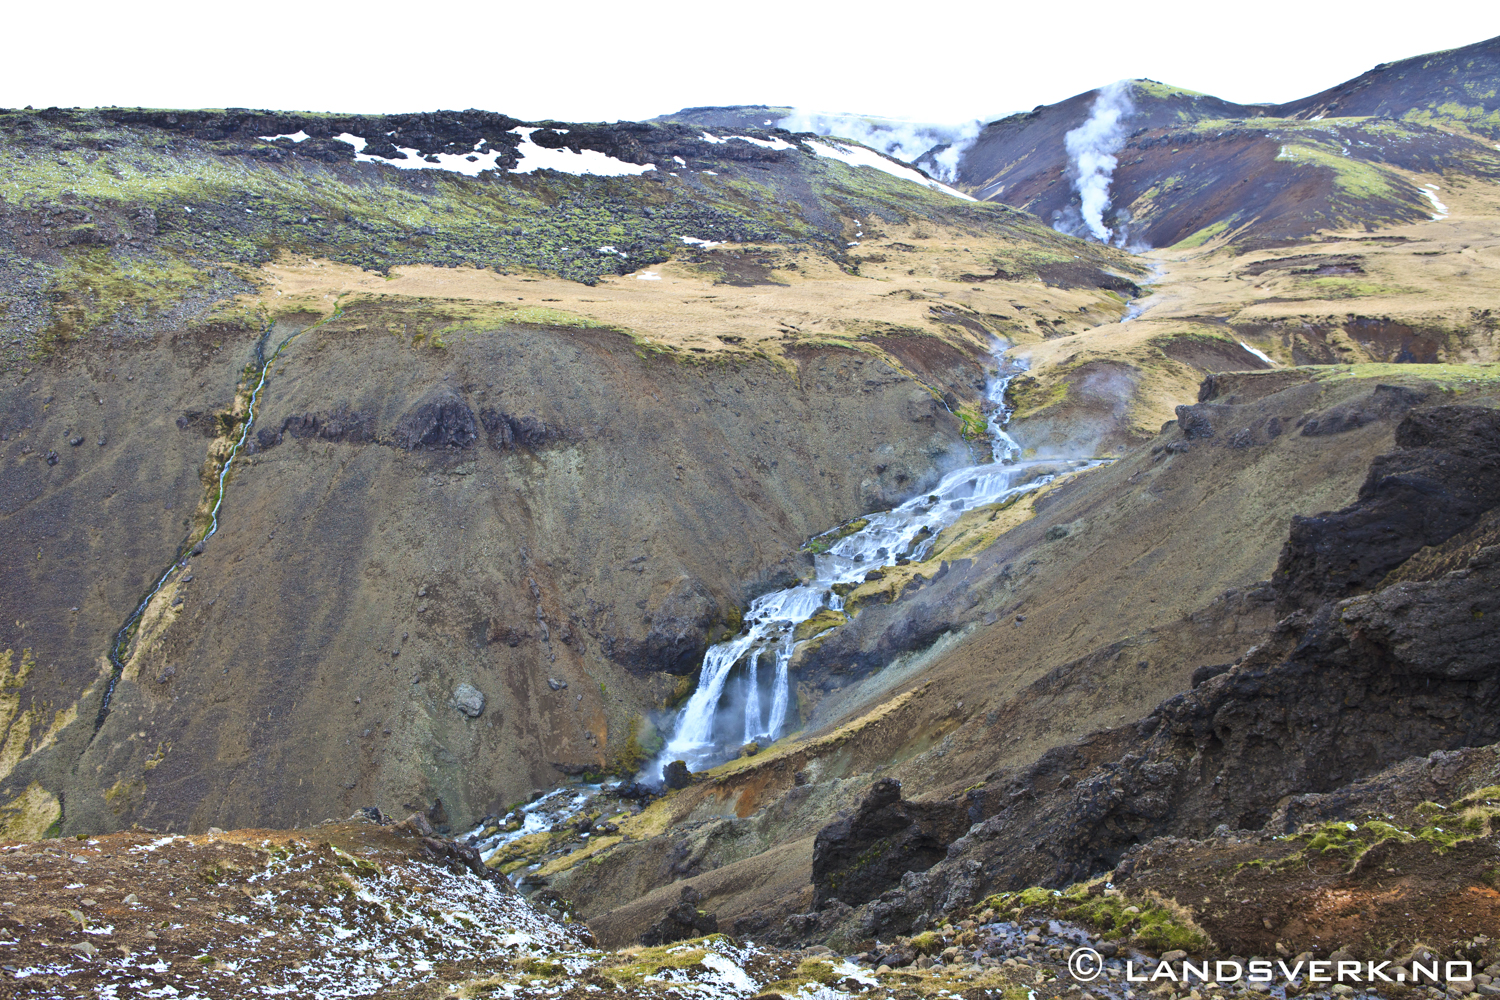 Reykjadalur natural hot springs. 

(Canon EOS 5D Mark II / Canon EF 24-70mm f/2.8 L USM)